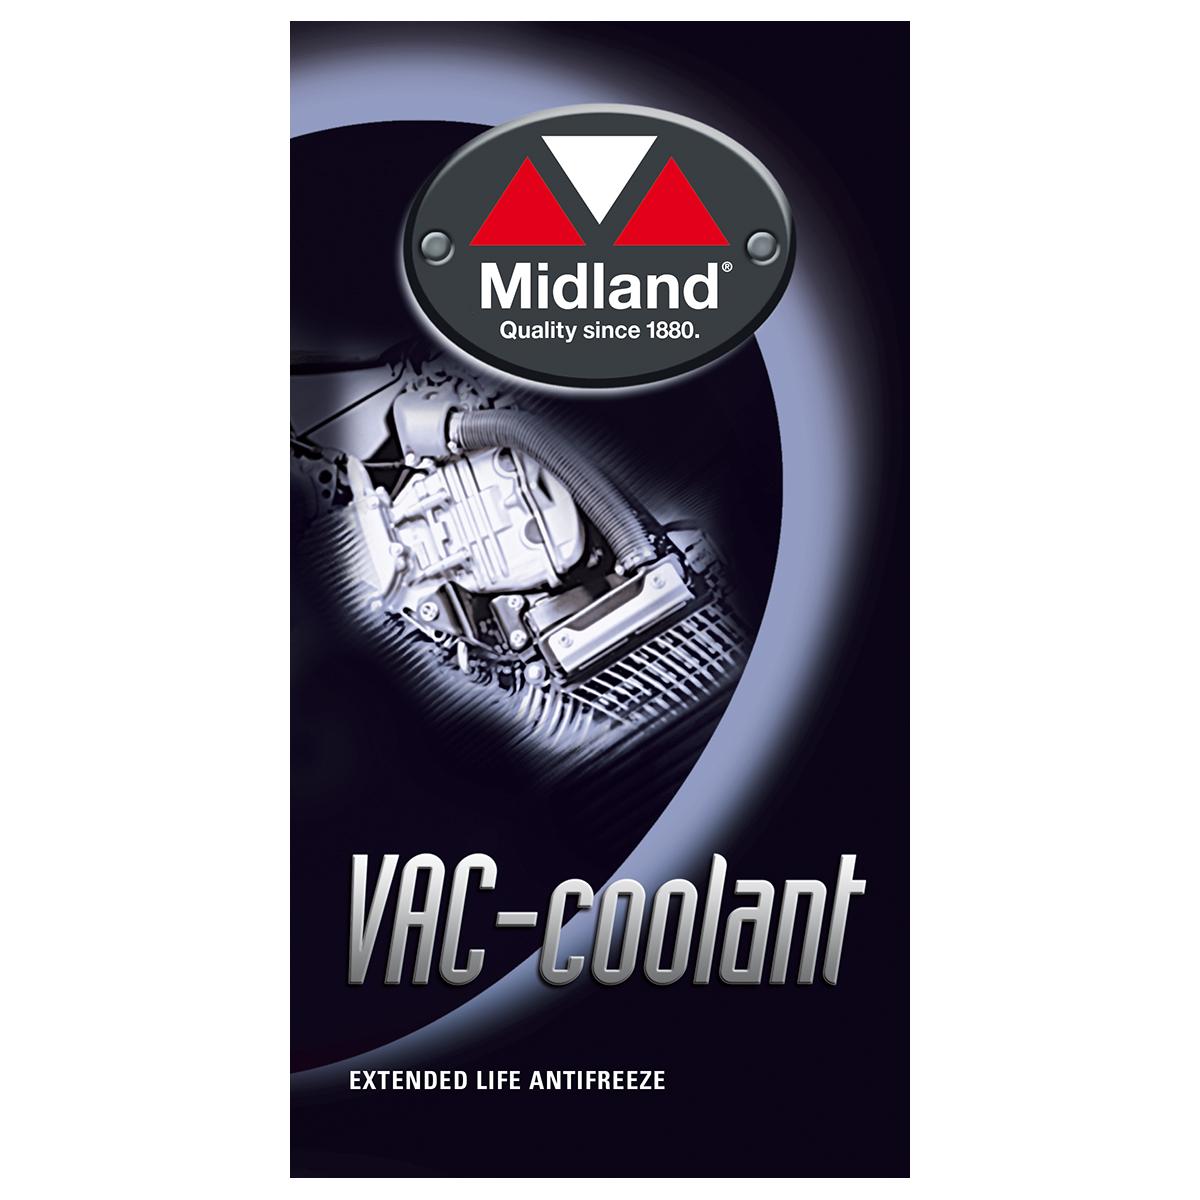 VAC-Coolant